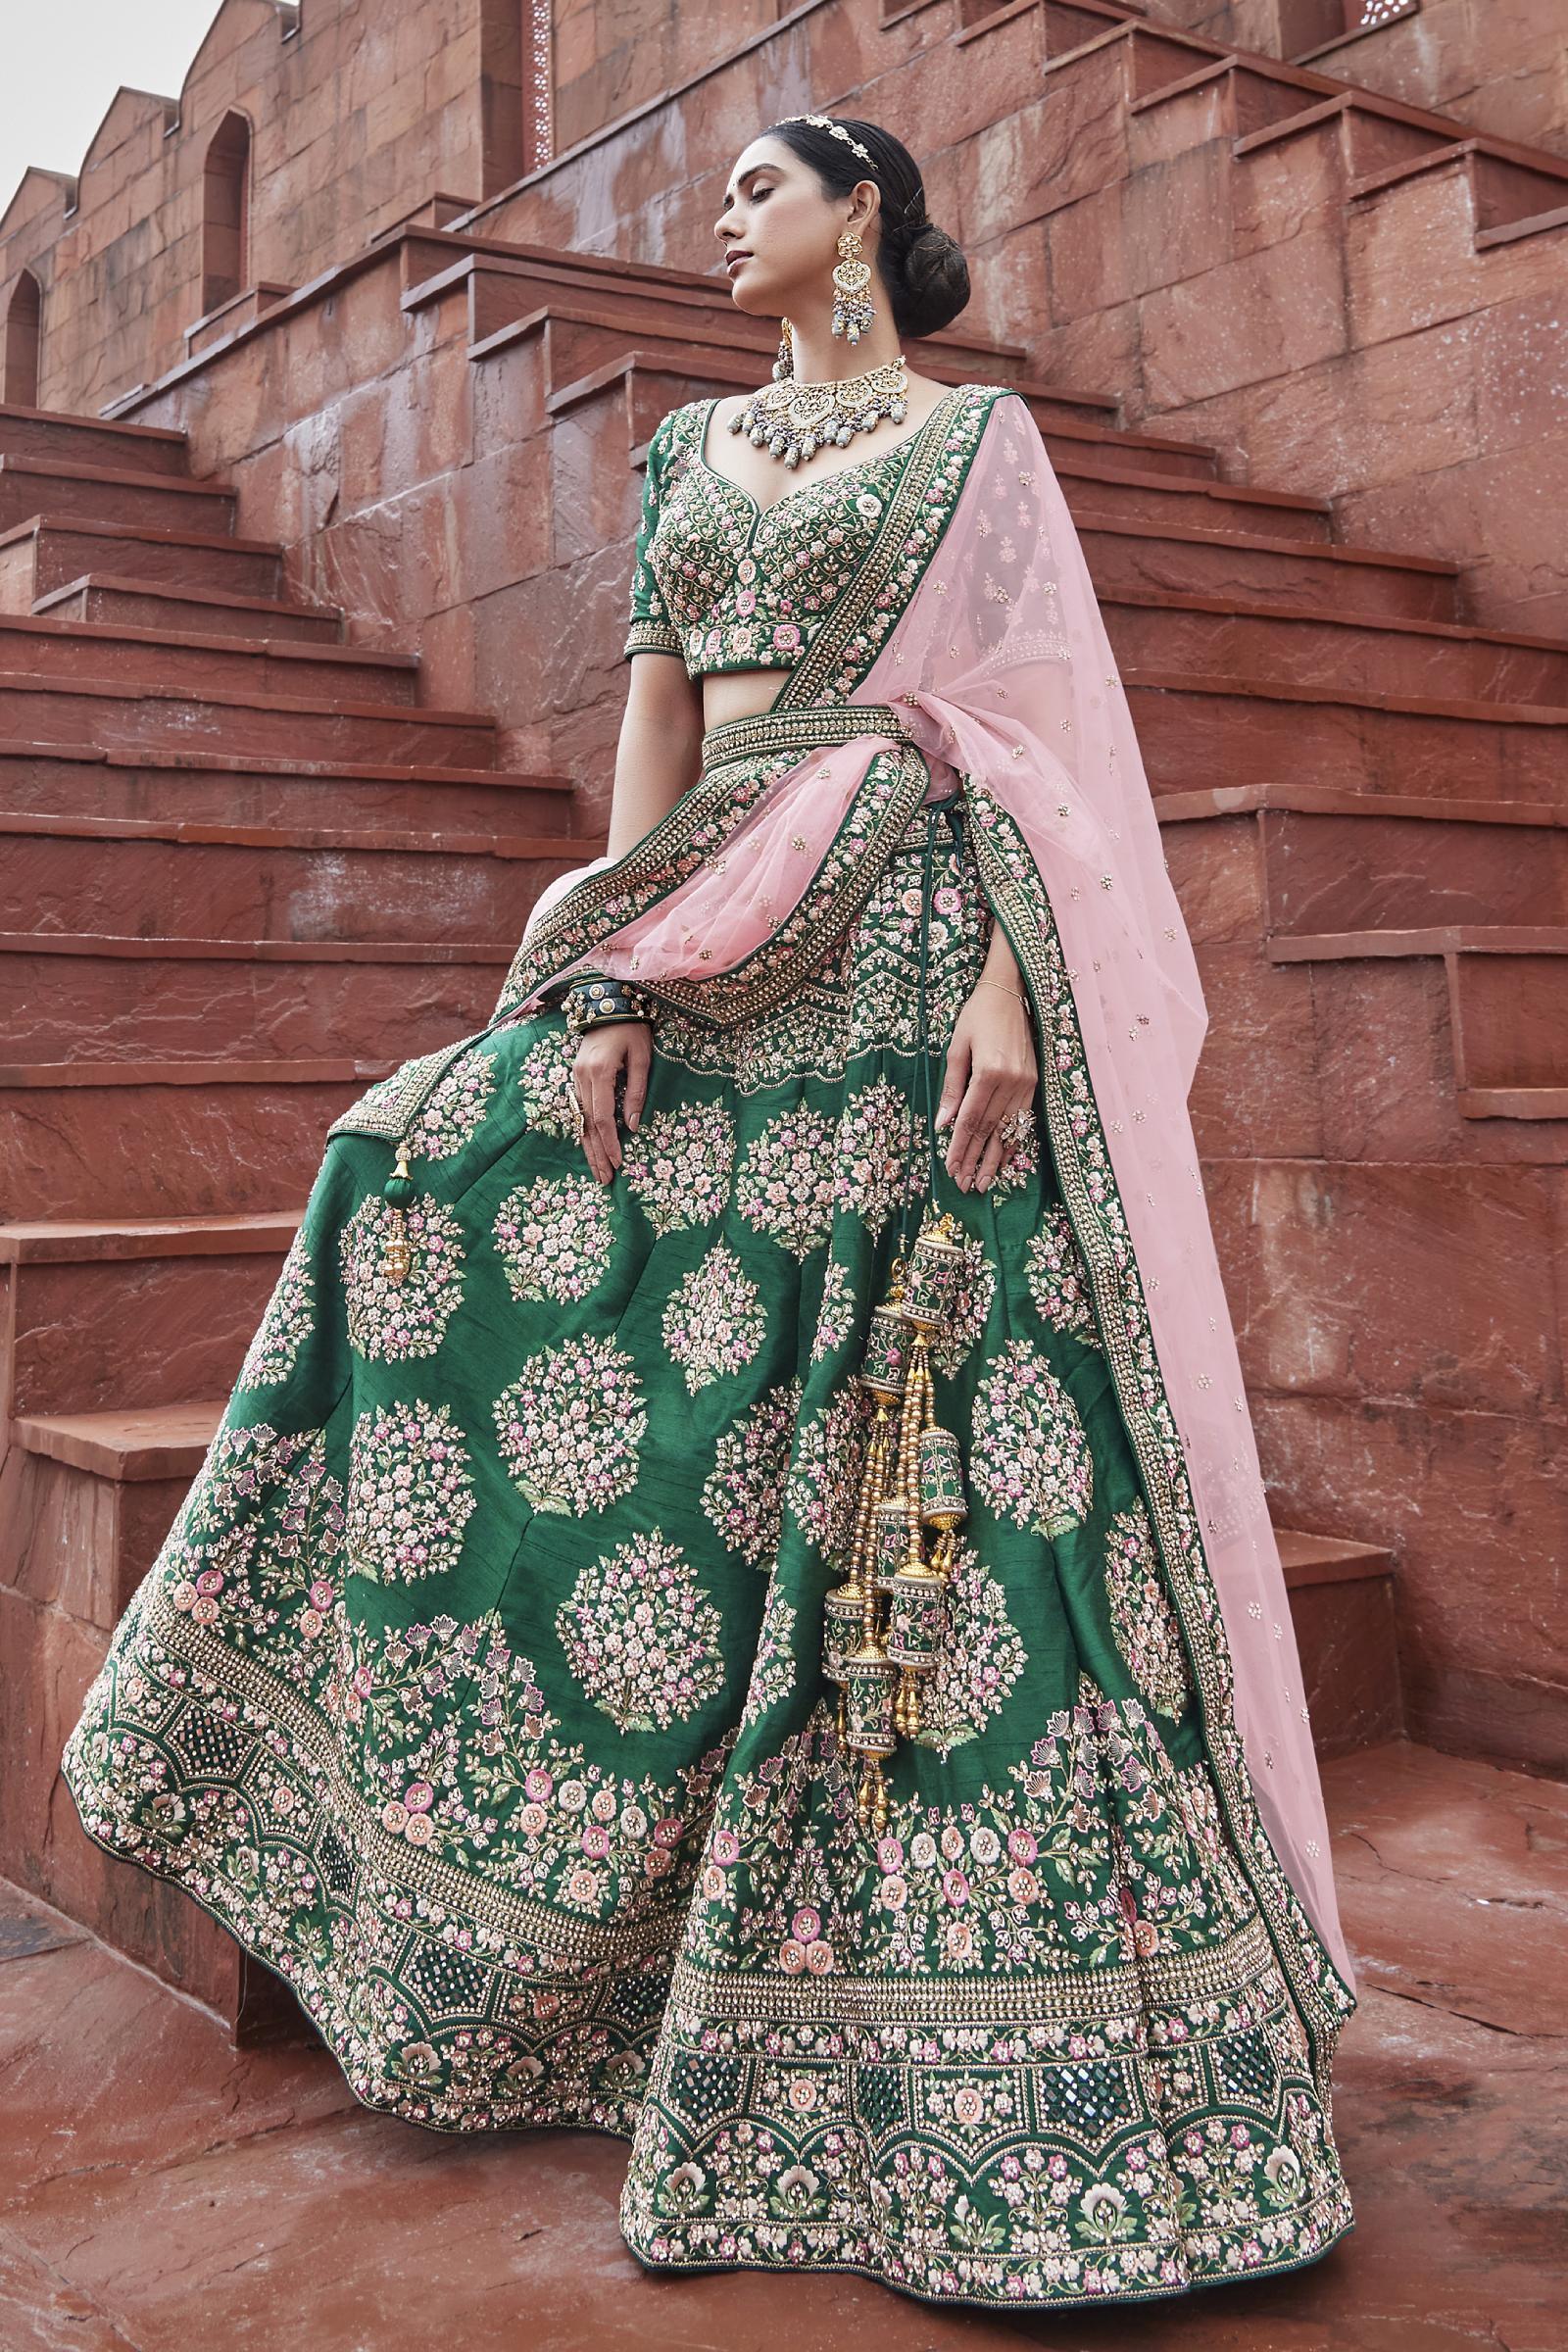 Bridal Anarkali Suits Kurtis Online Shopping for Women at Low Prices